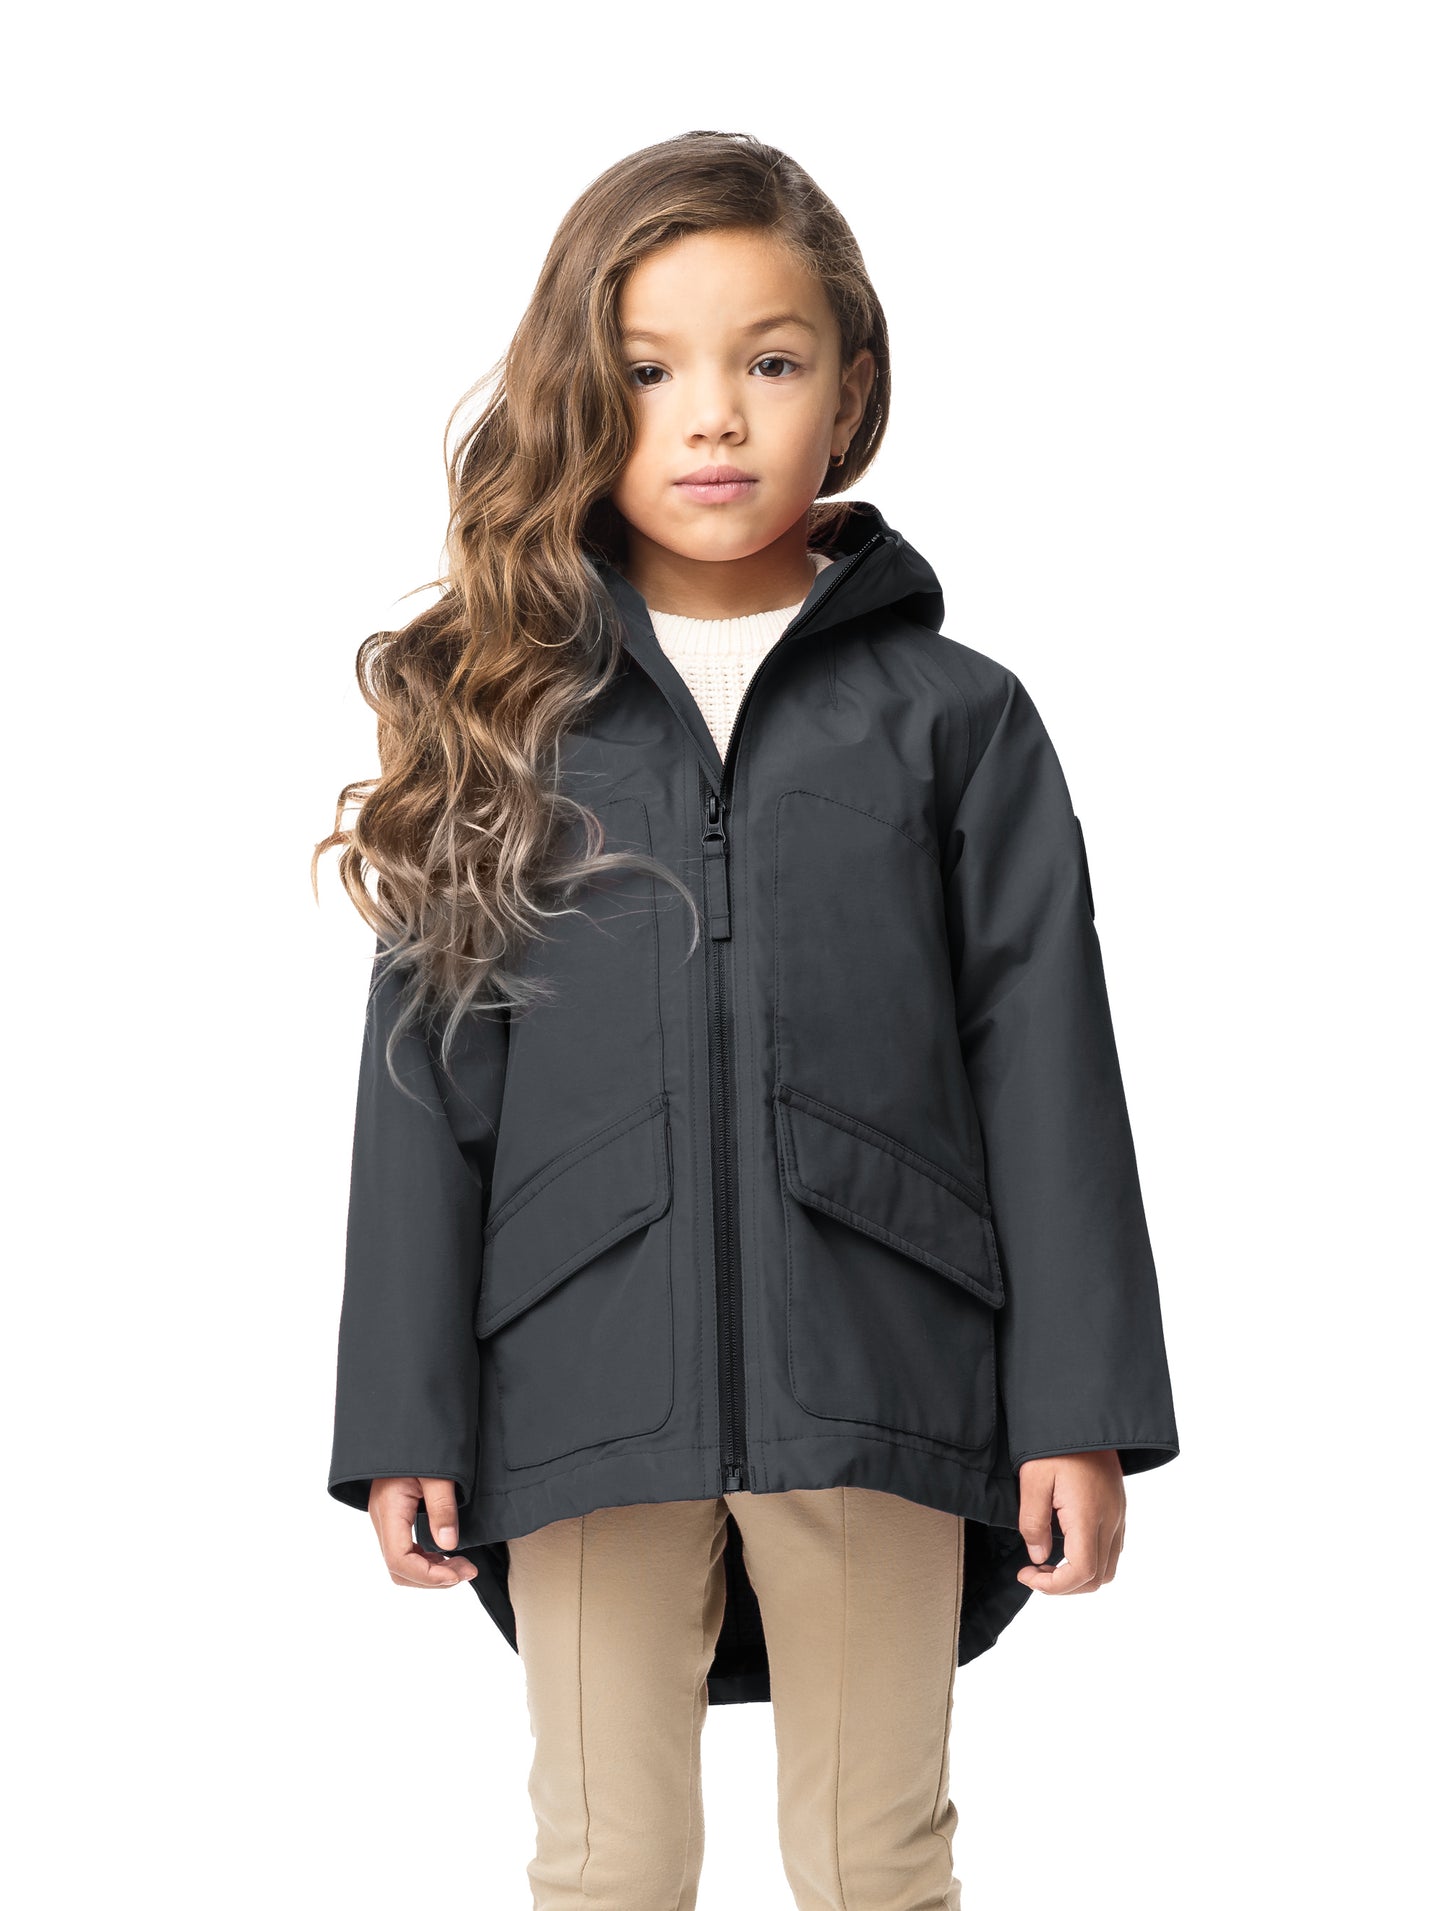 Kid's hip length fishtail rain jacket with hood in Black